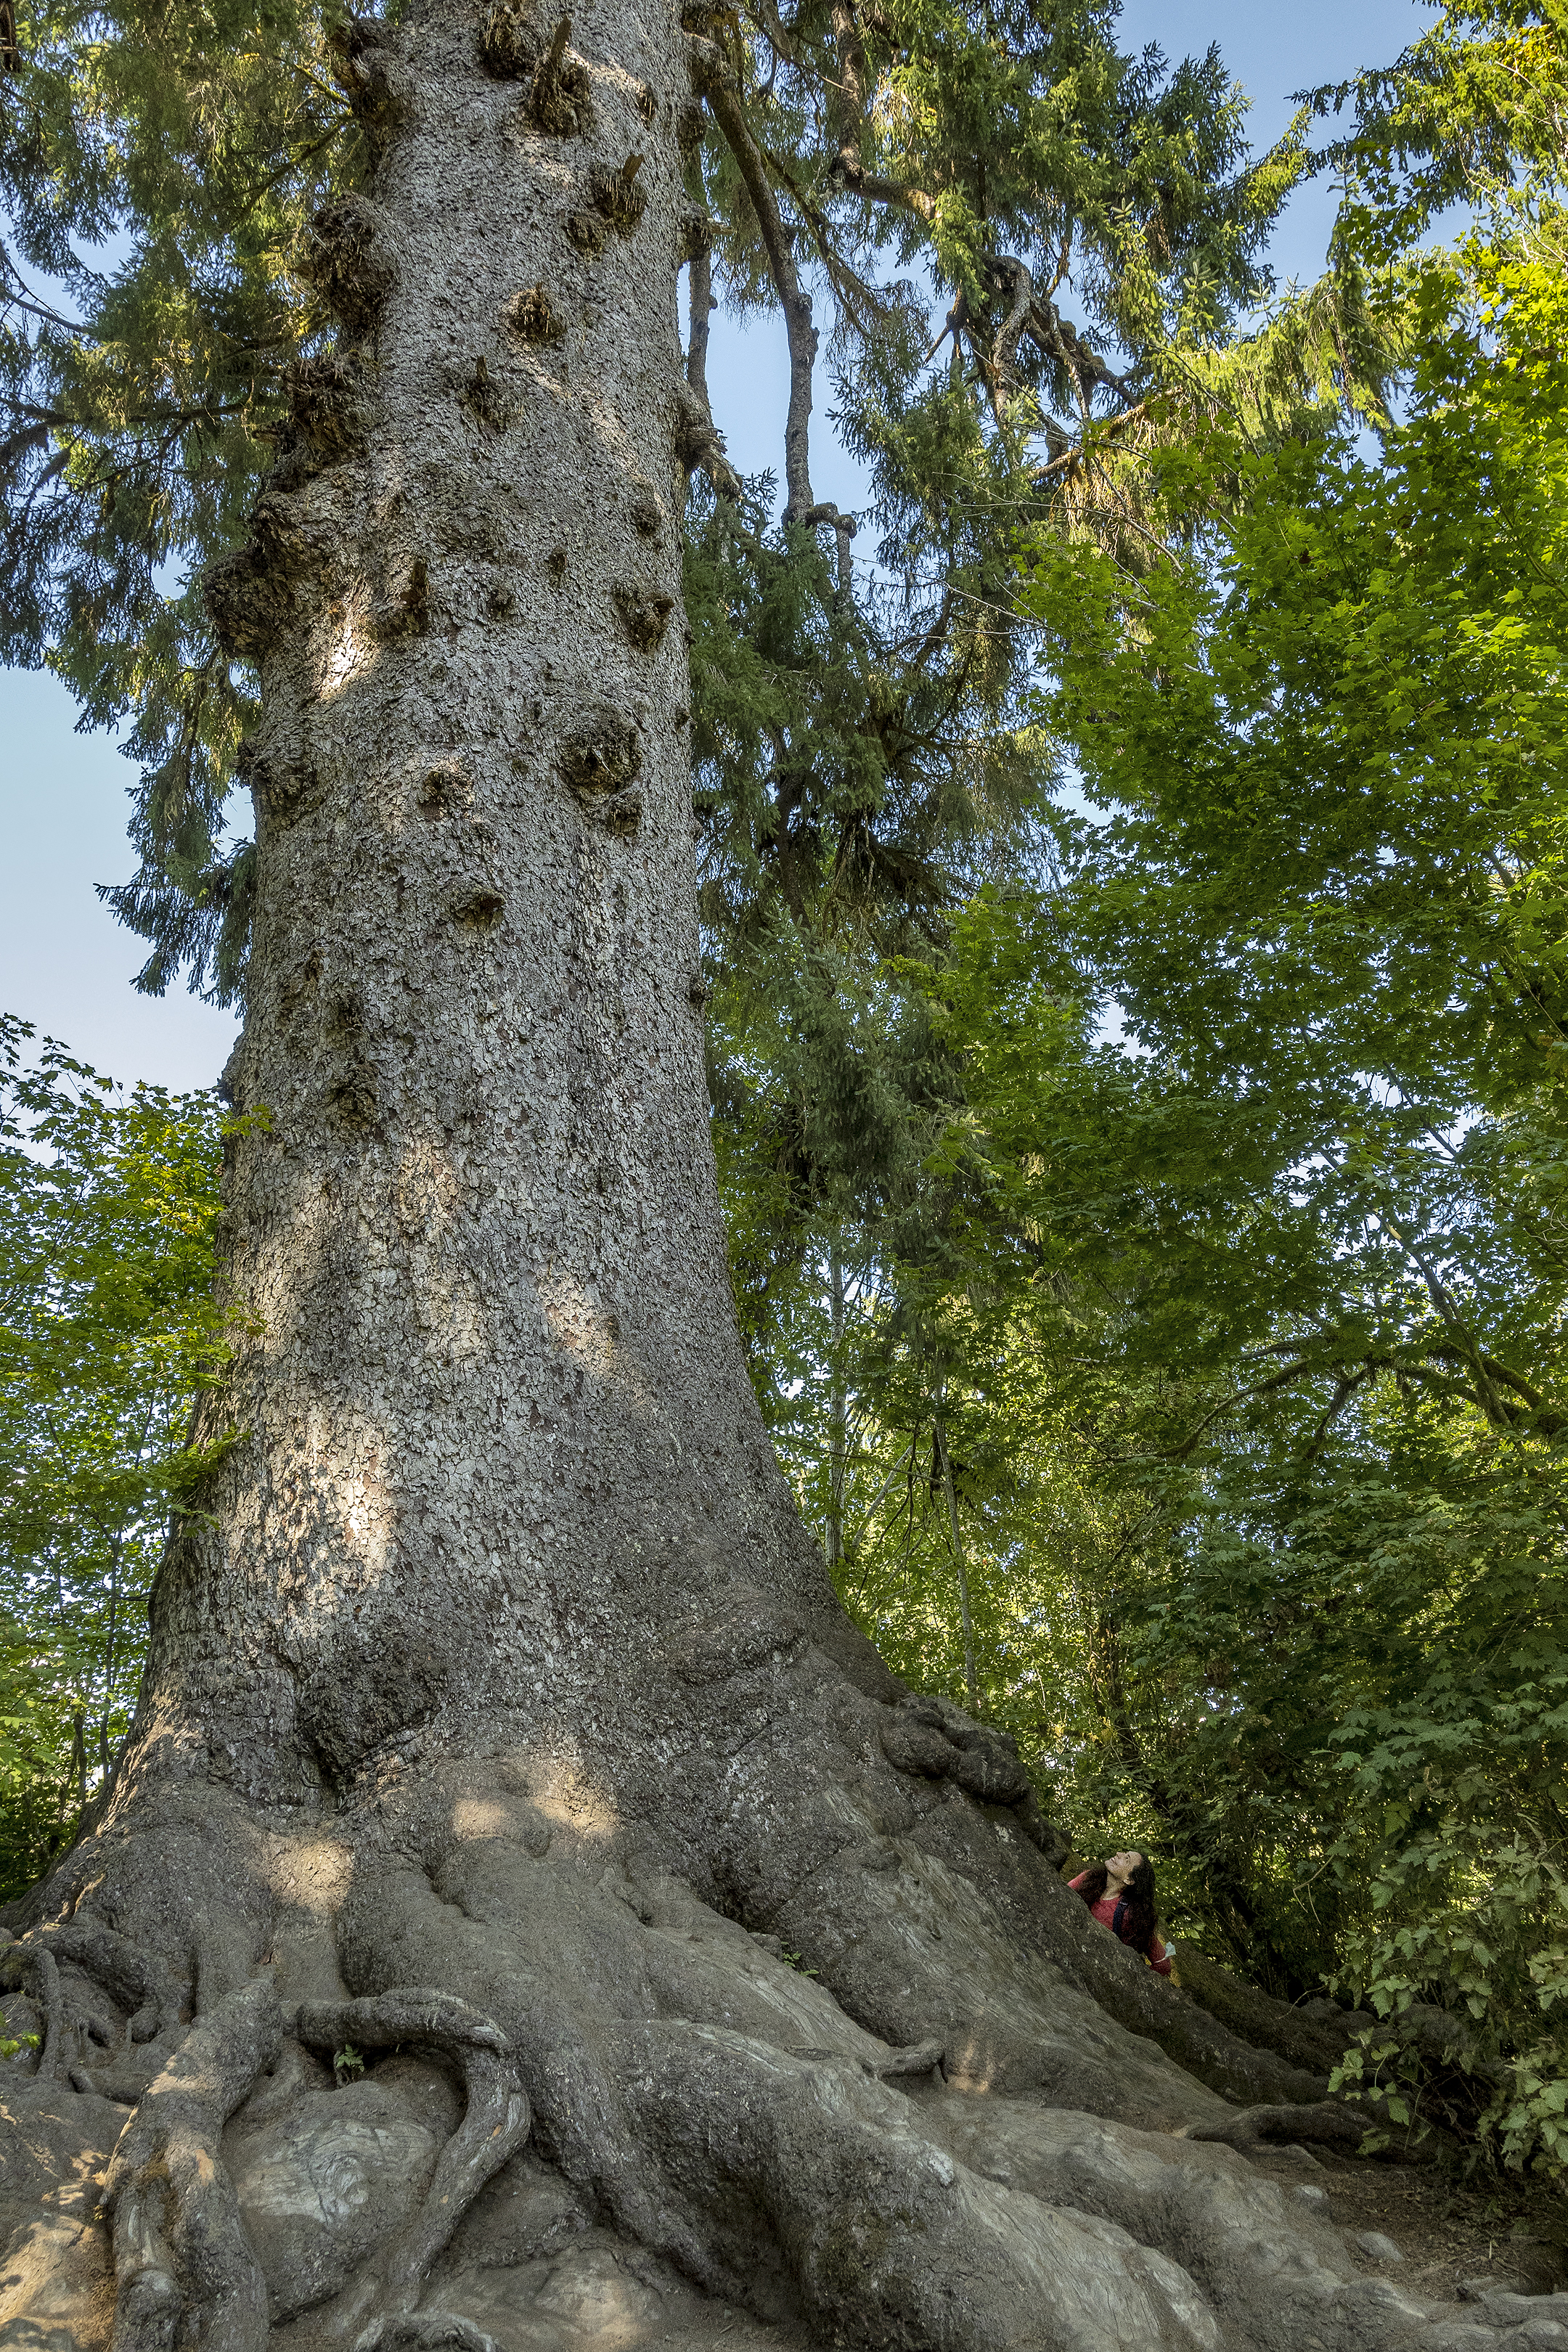  lake quinault worlds largest spruce tree linda